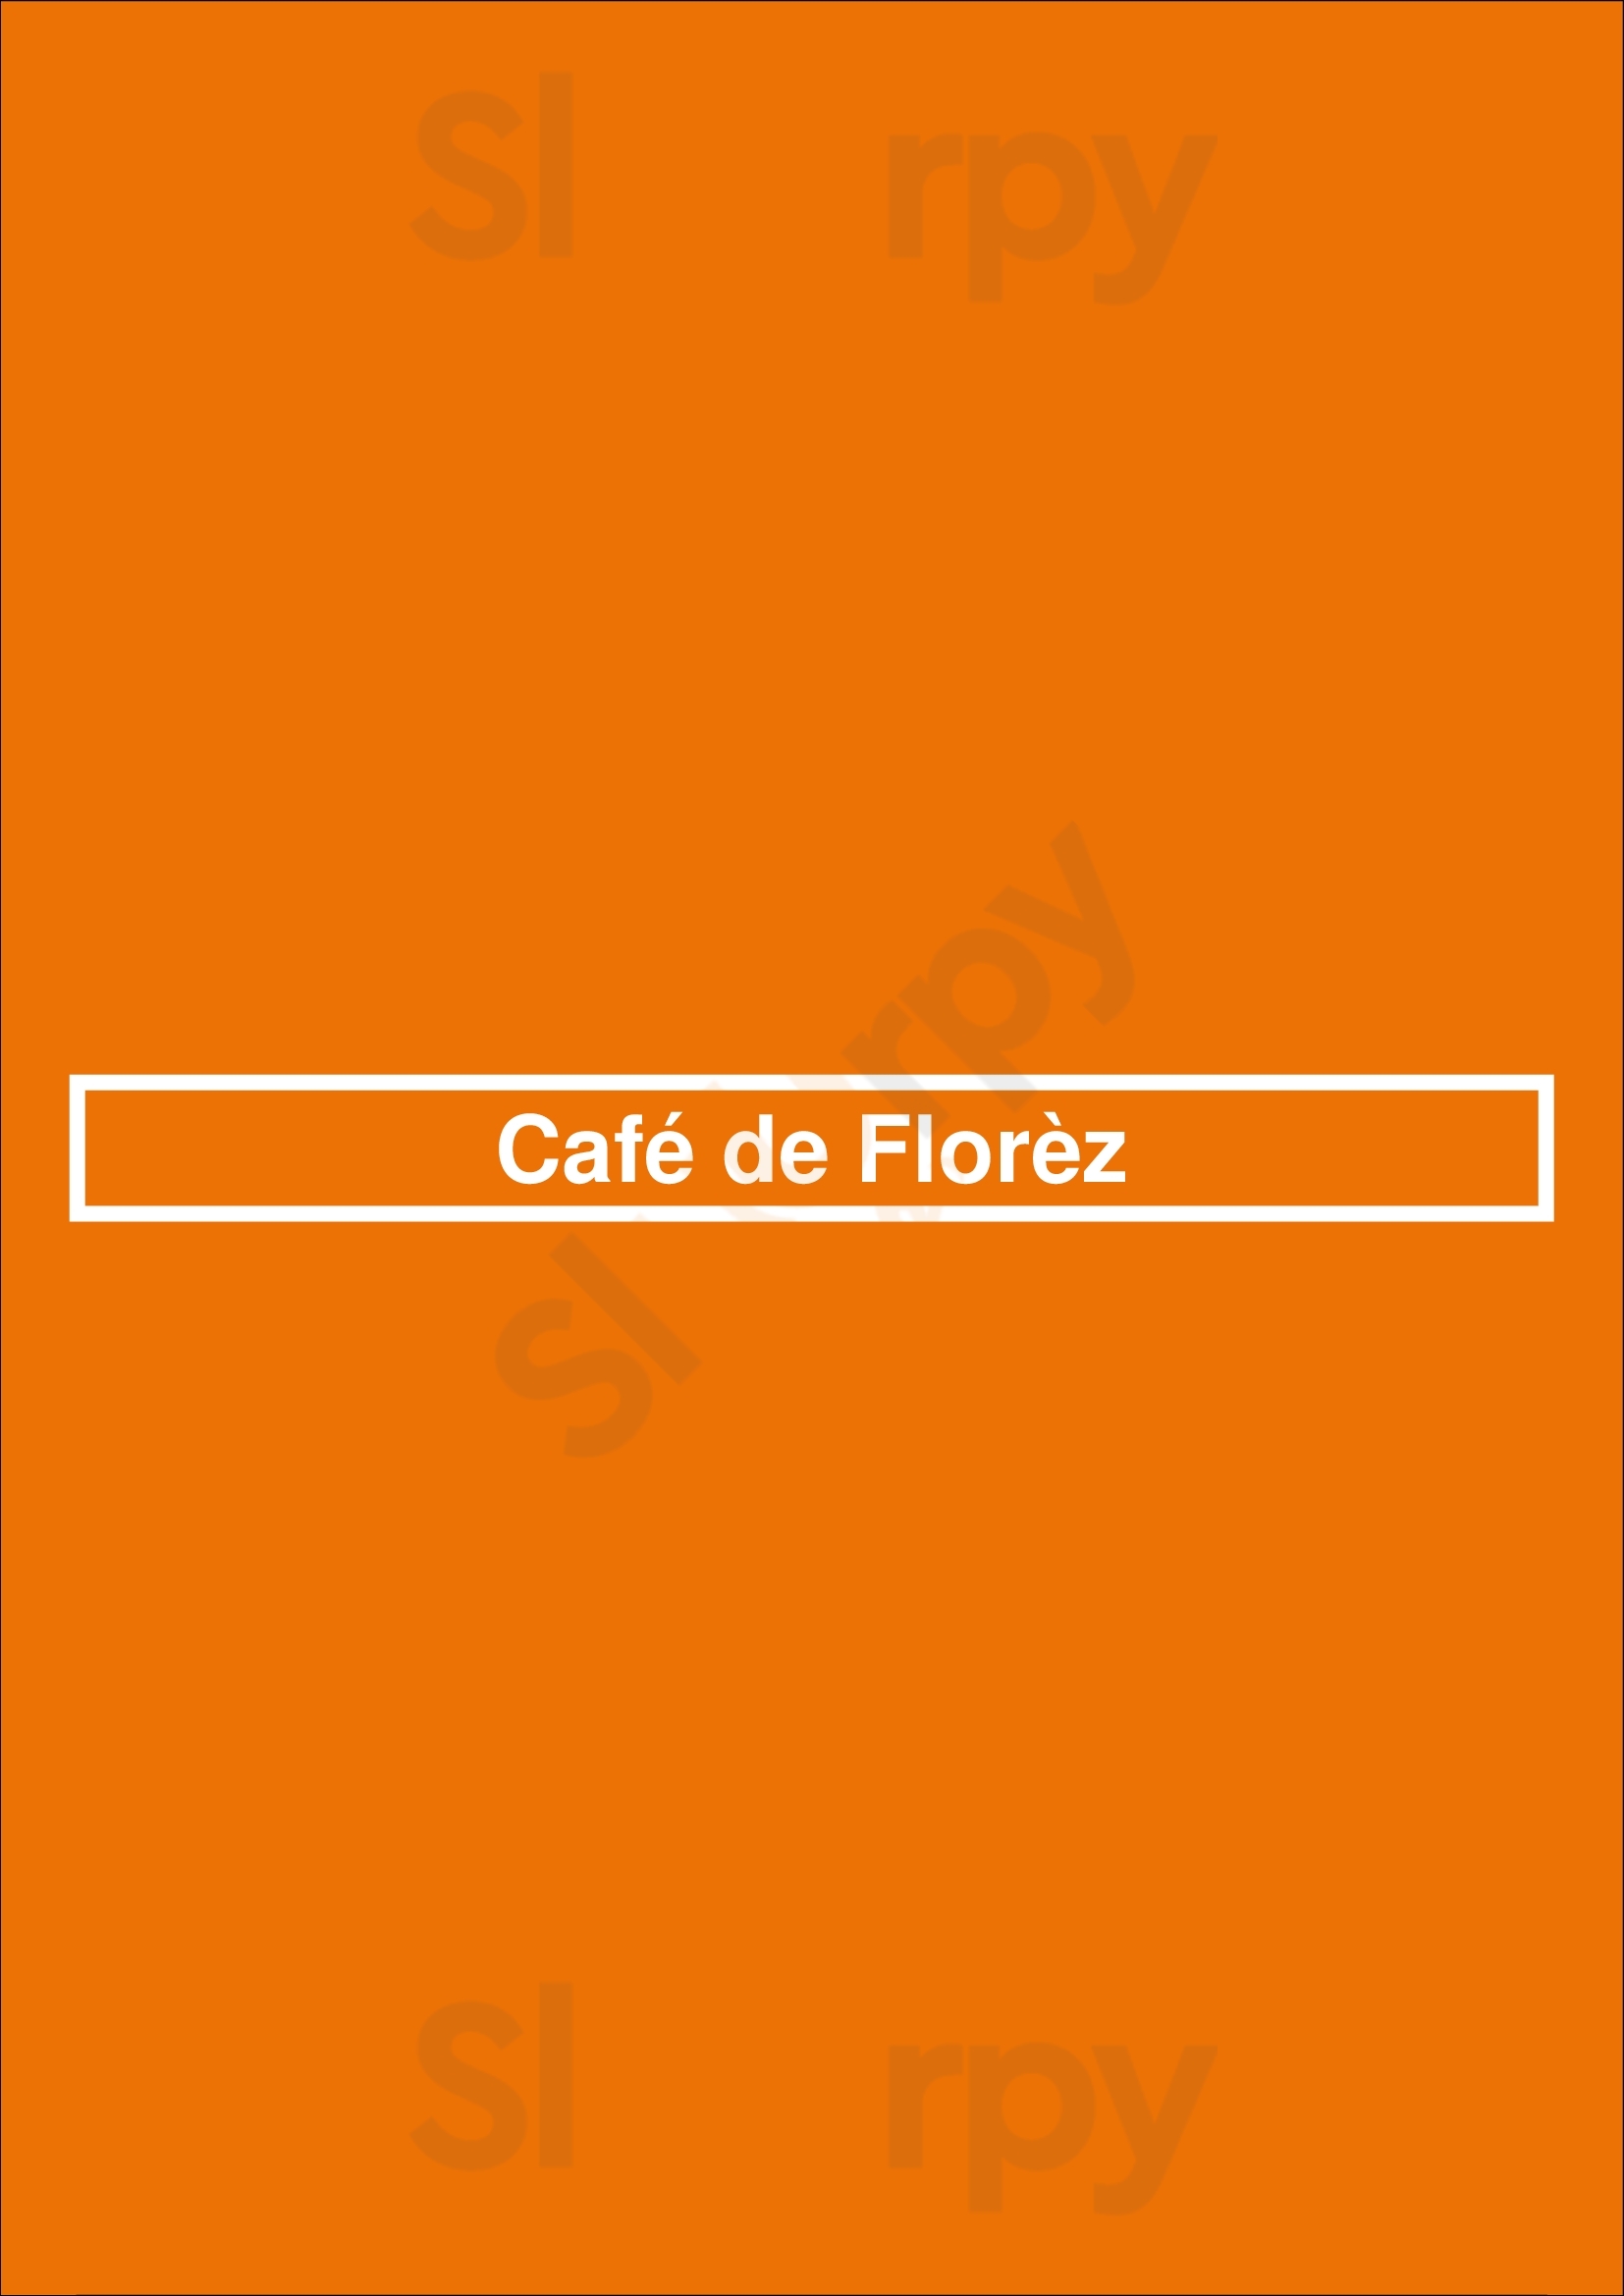 Café De Florèz Den Haag Menu - 1